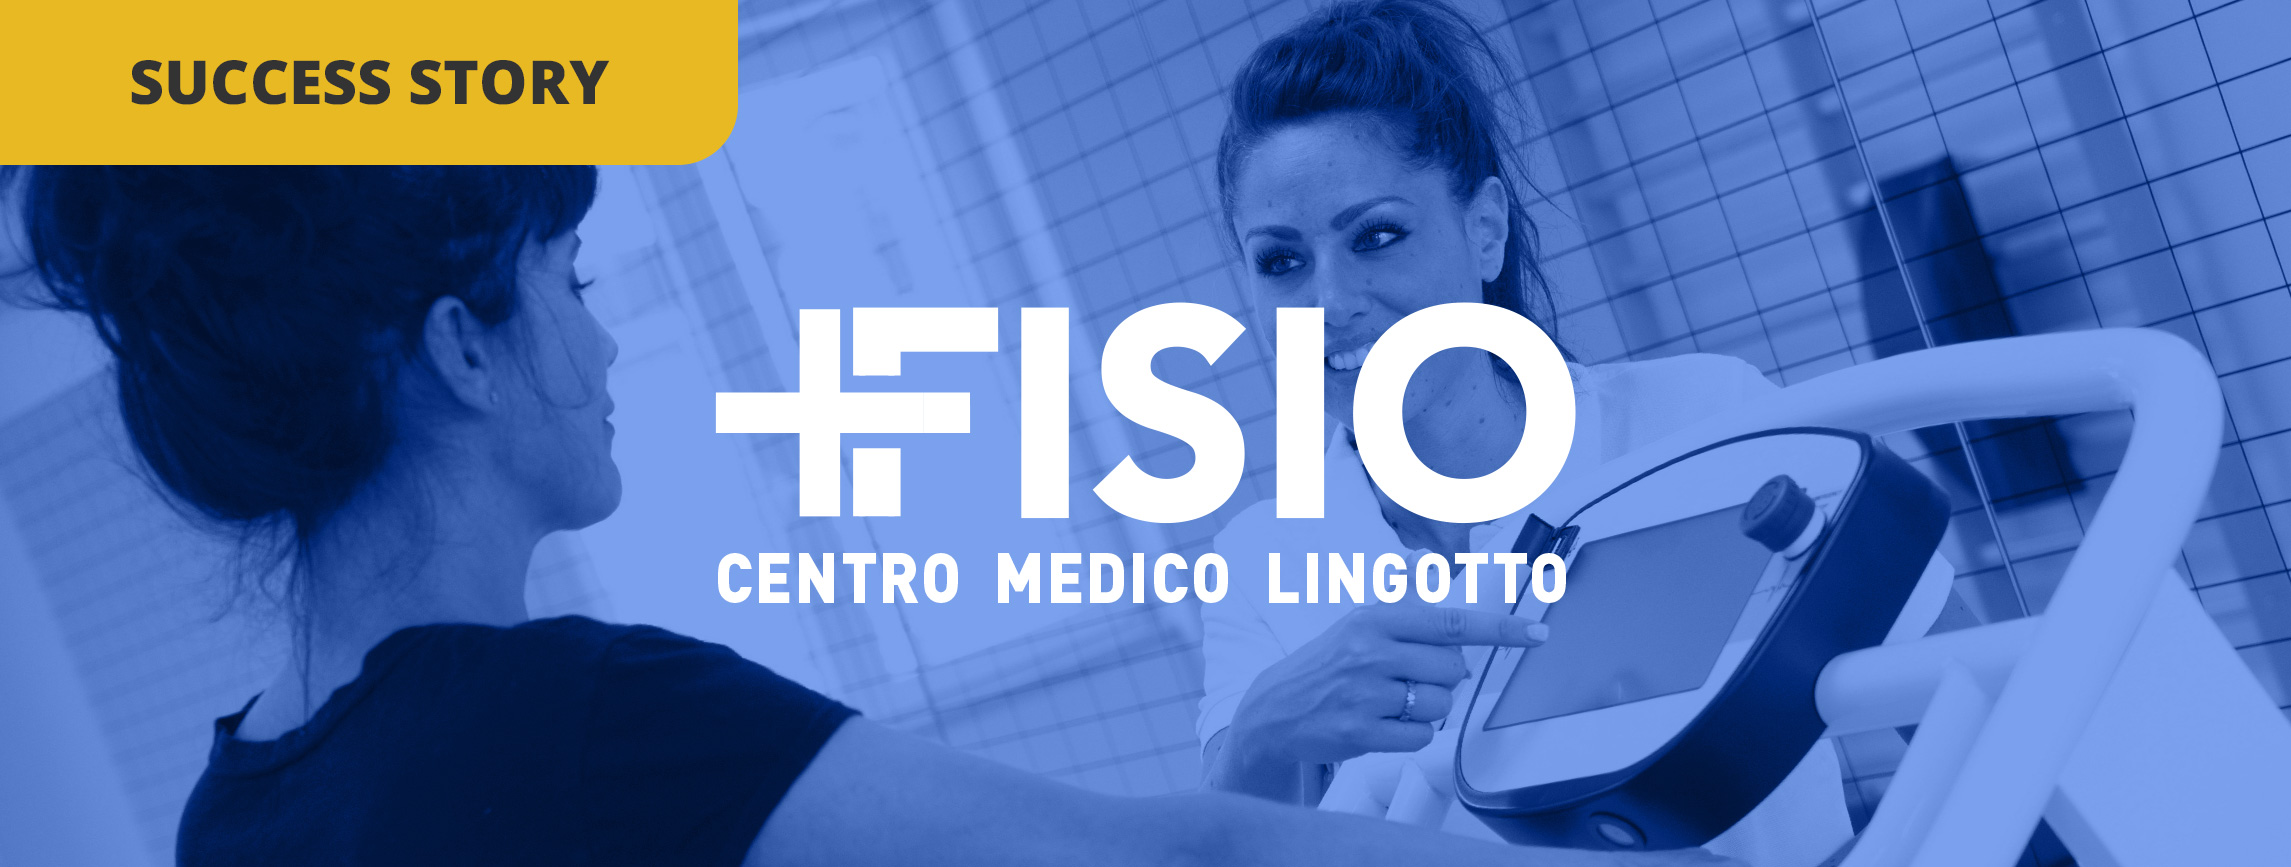 Centro Medico Fisio Lingotto Erfolgsgeschichte